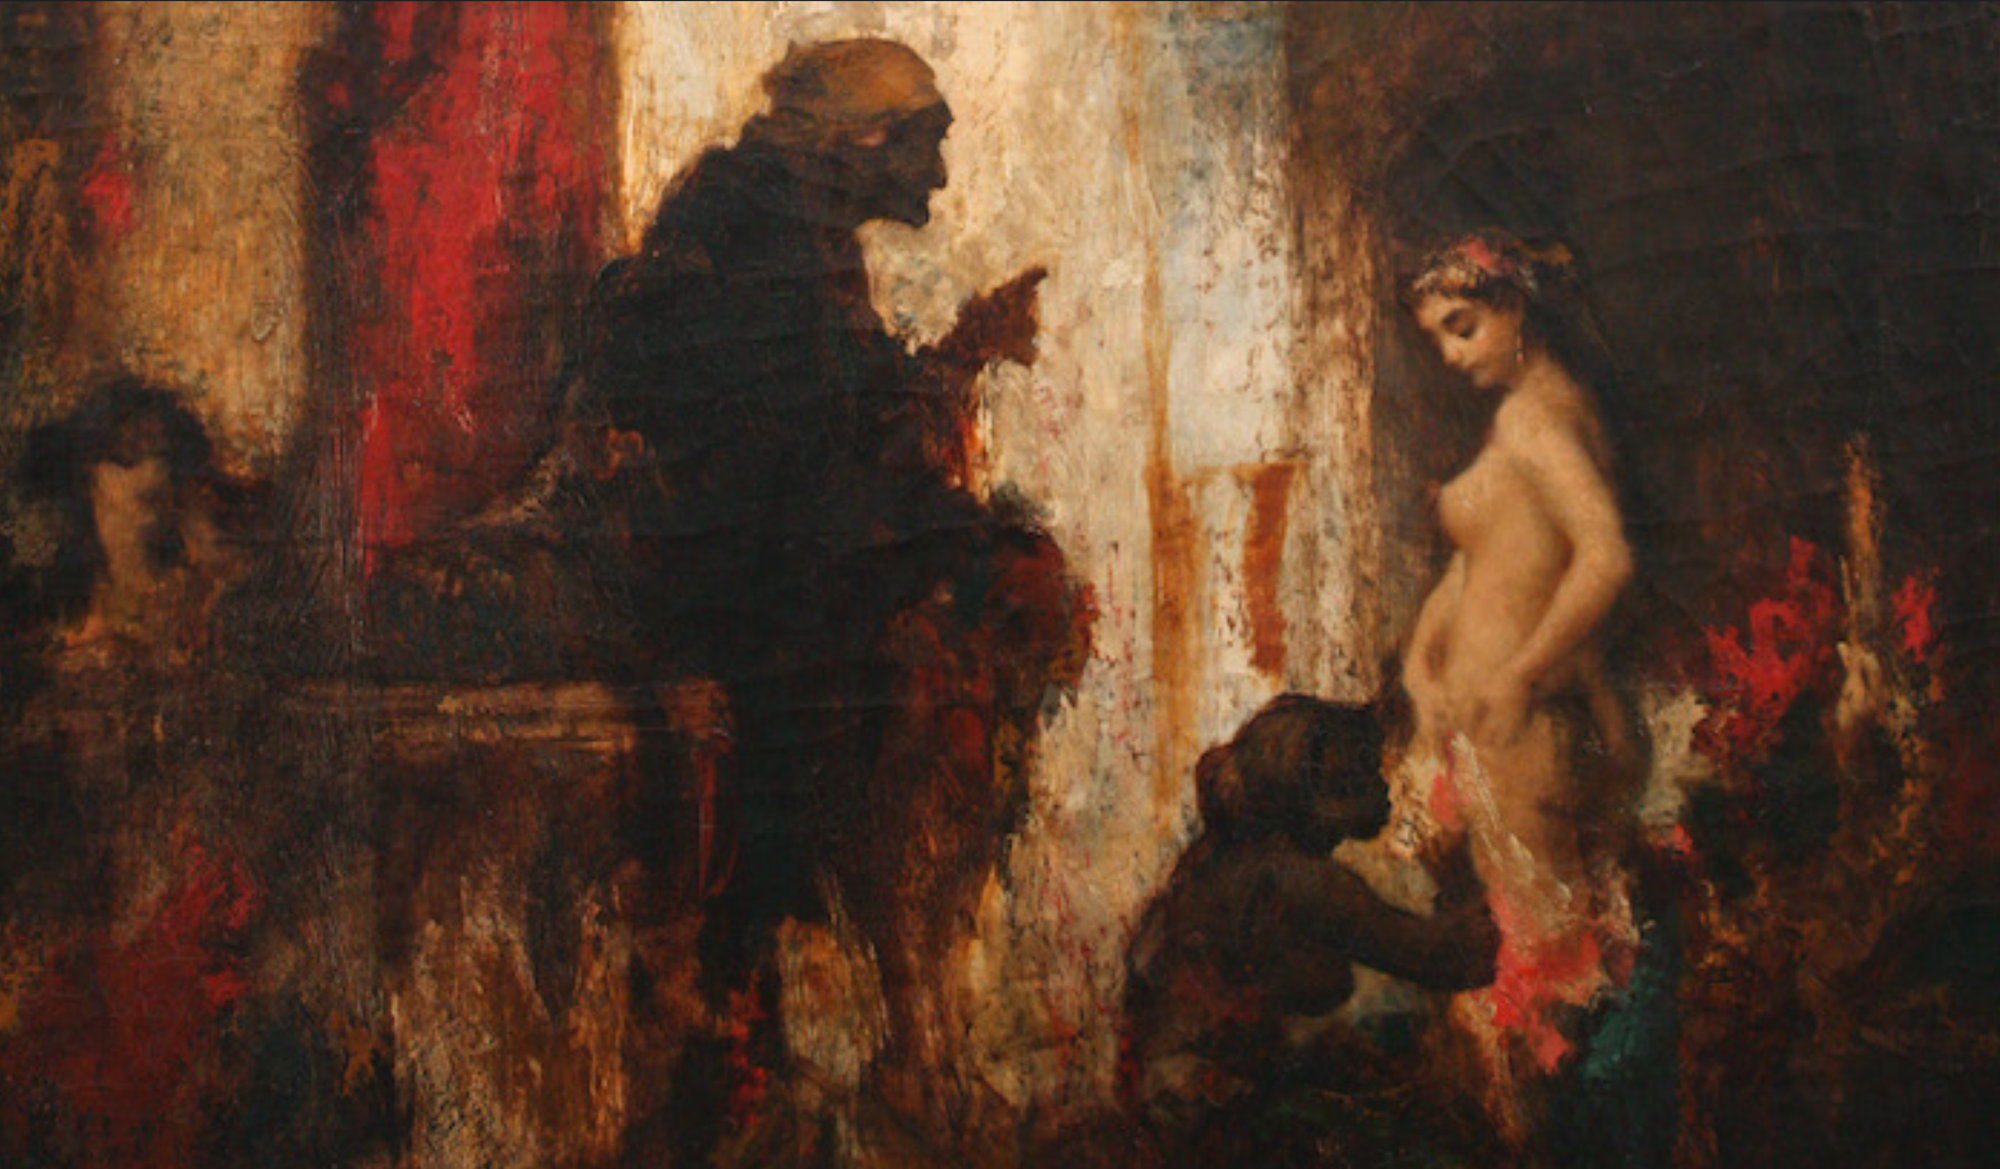 Harem Scene by Narcisse Virgilio Diaz de la Peña (mid-1800s)